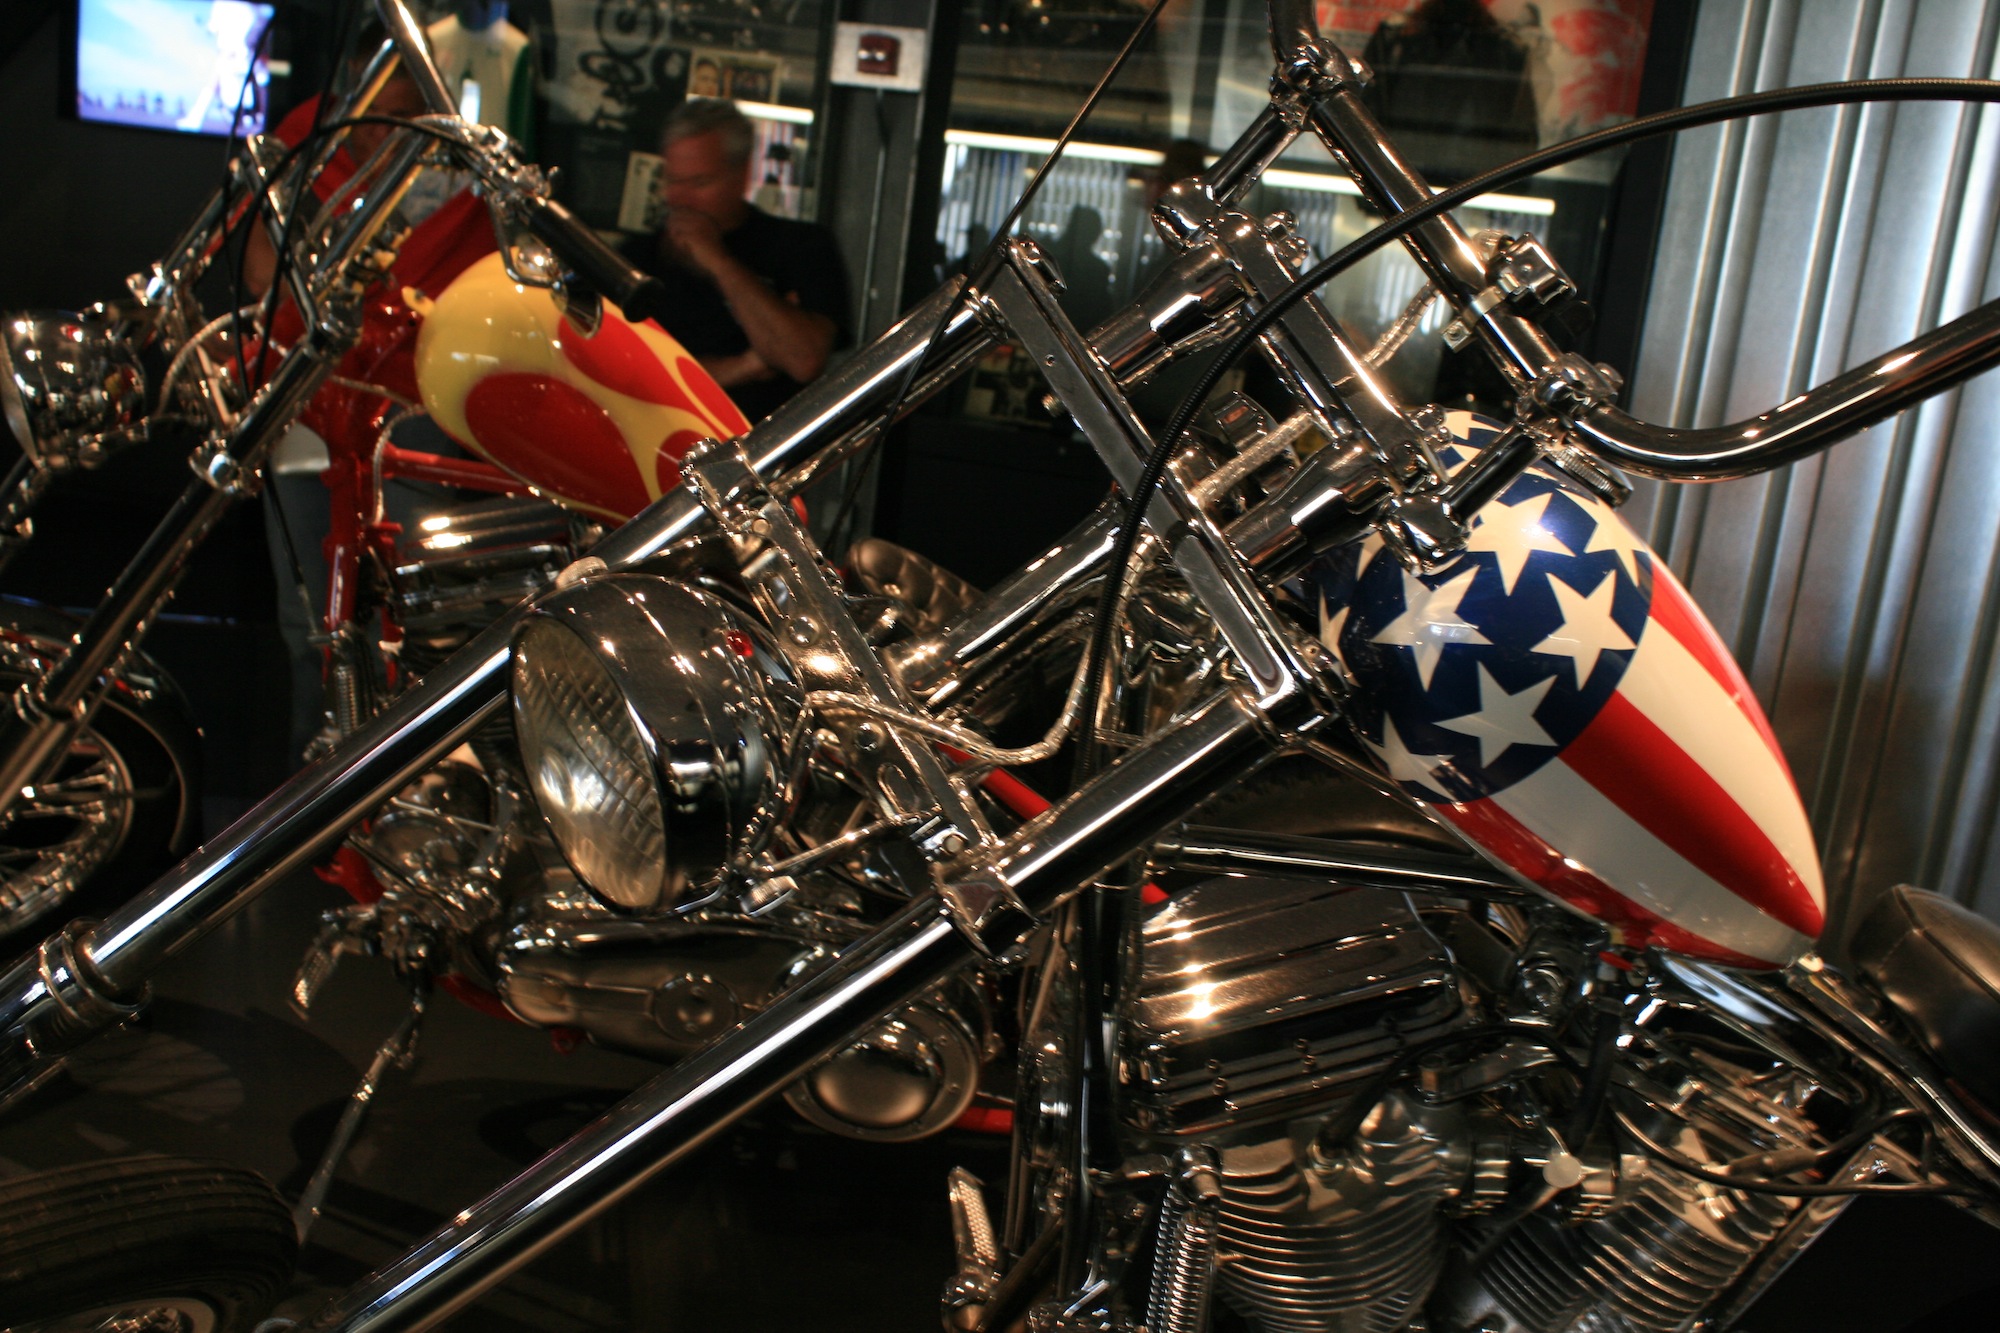 Harley-Davidson museum